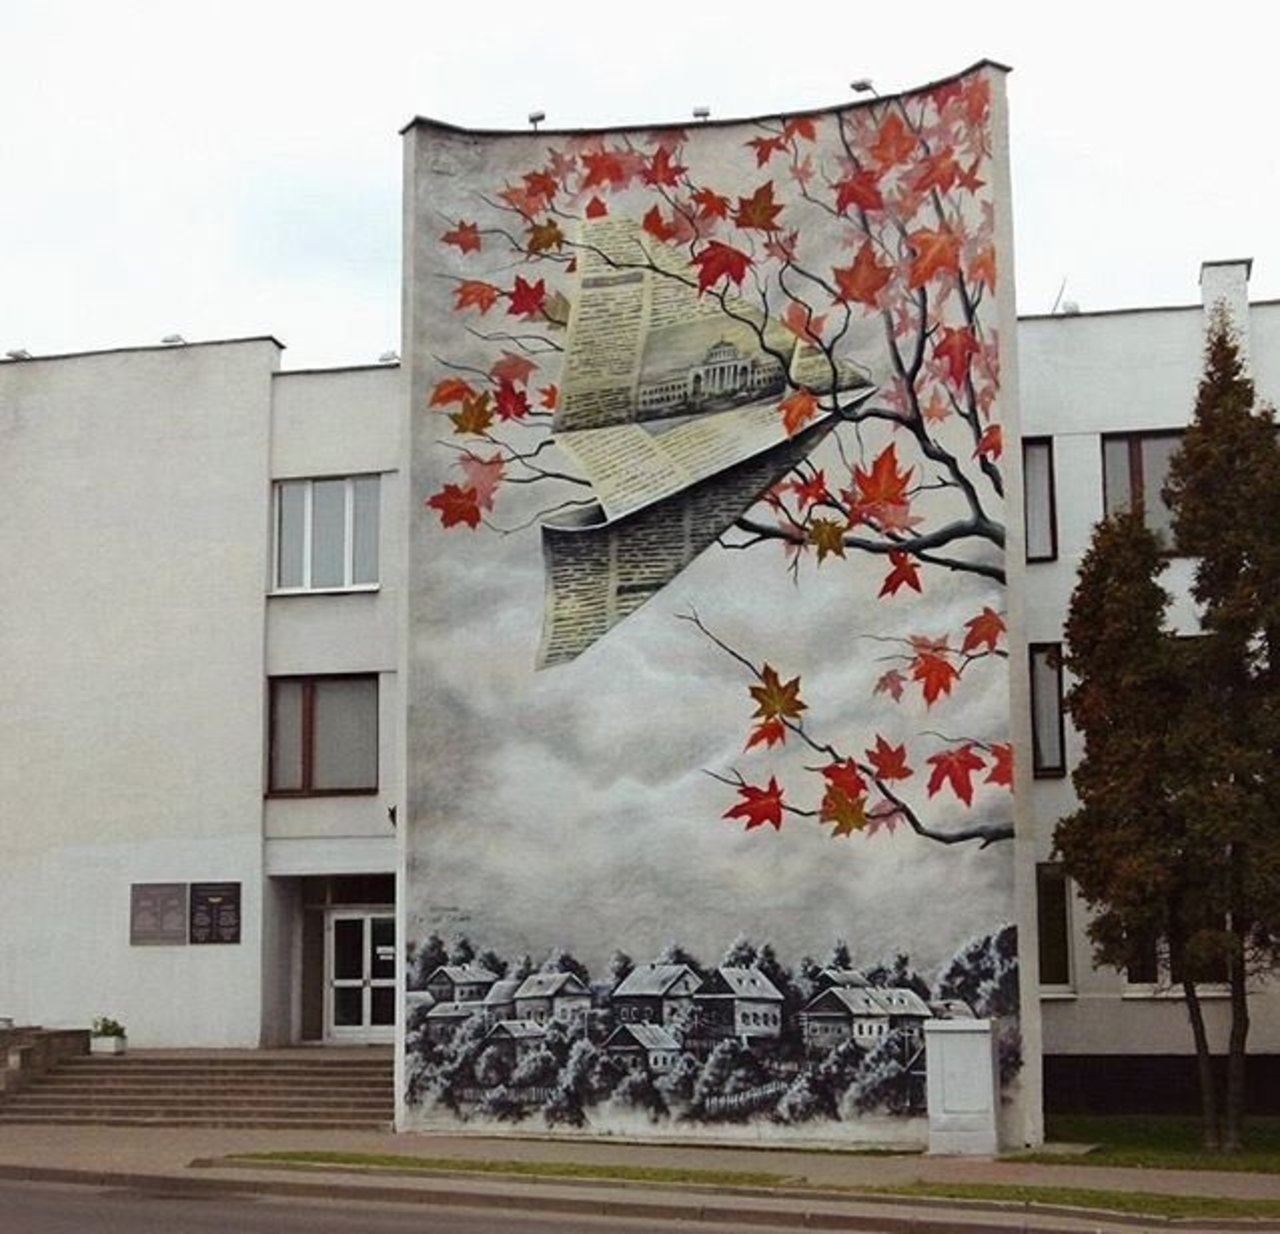 RT bkedc New Street Art by MUTUS in Belarus 

#art #graffiti #mural #streetart https://t.co/pdRcb8cifN